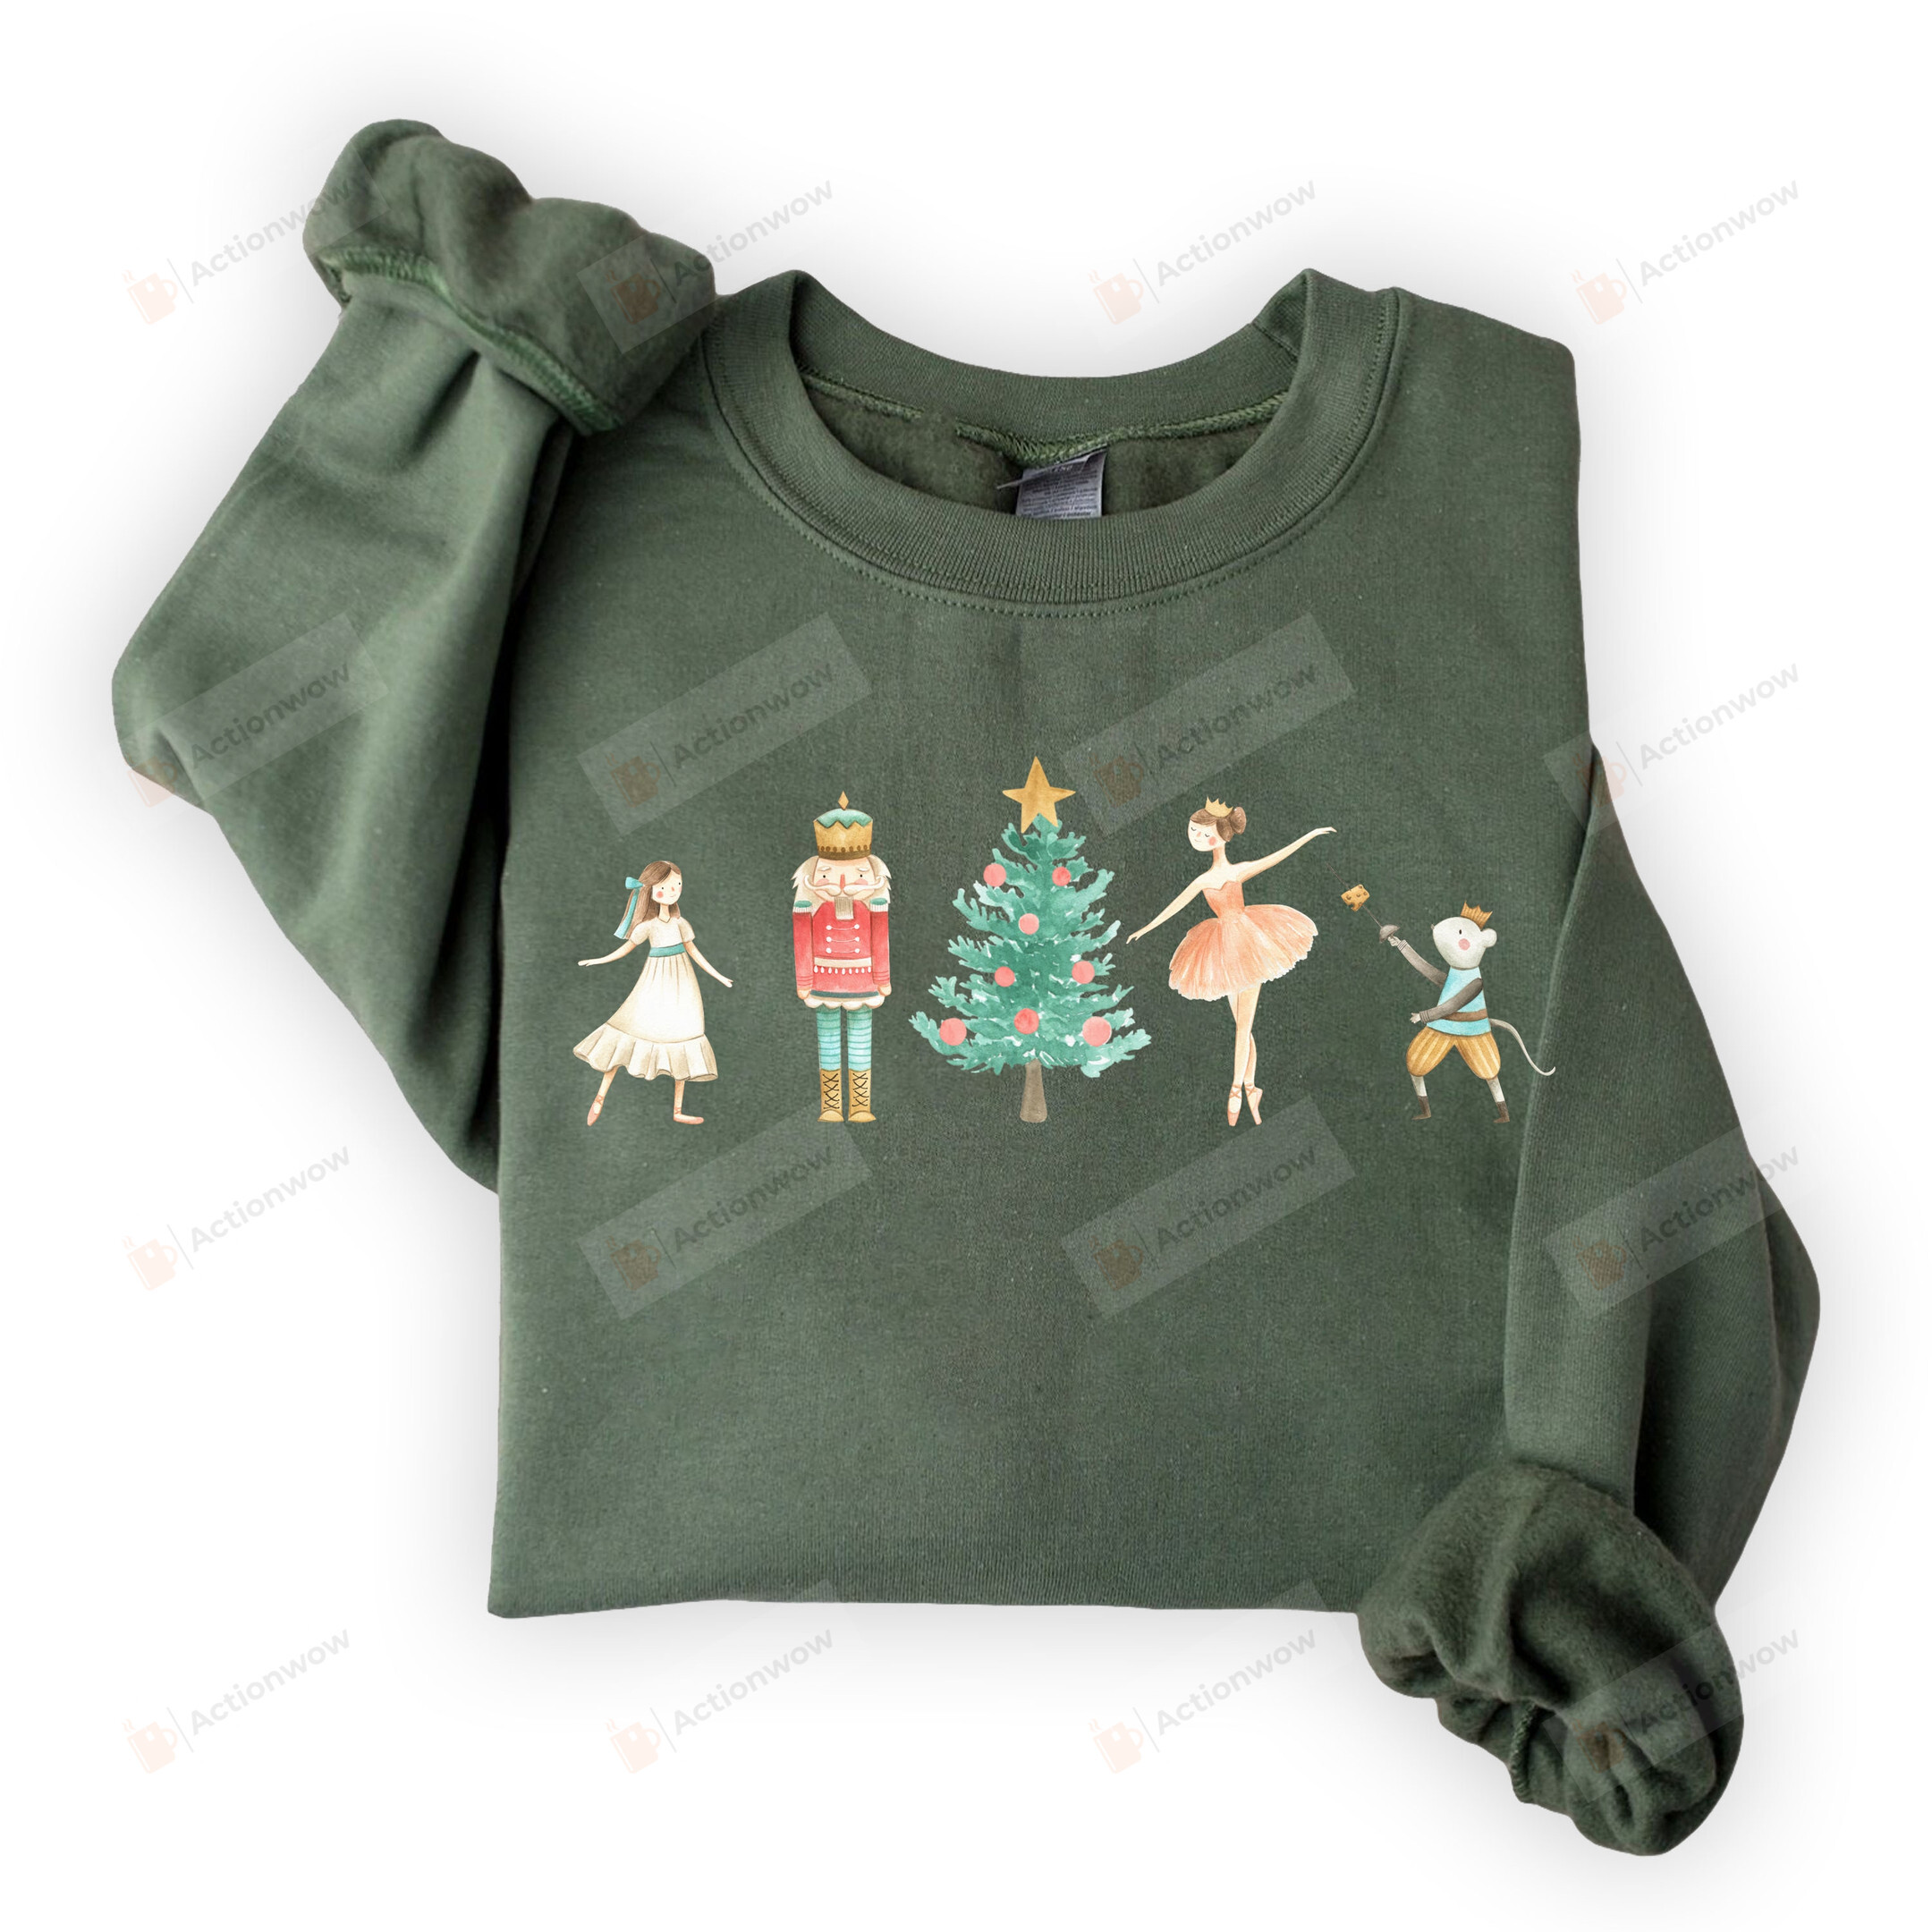 Nutcracker Christmas Sweatshirt, Nutcracker Christmas Sweatshirts For Family, Ballet Sweater Women